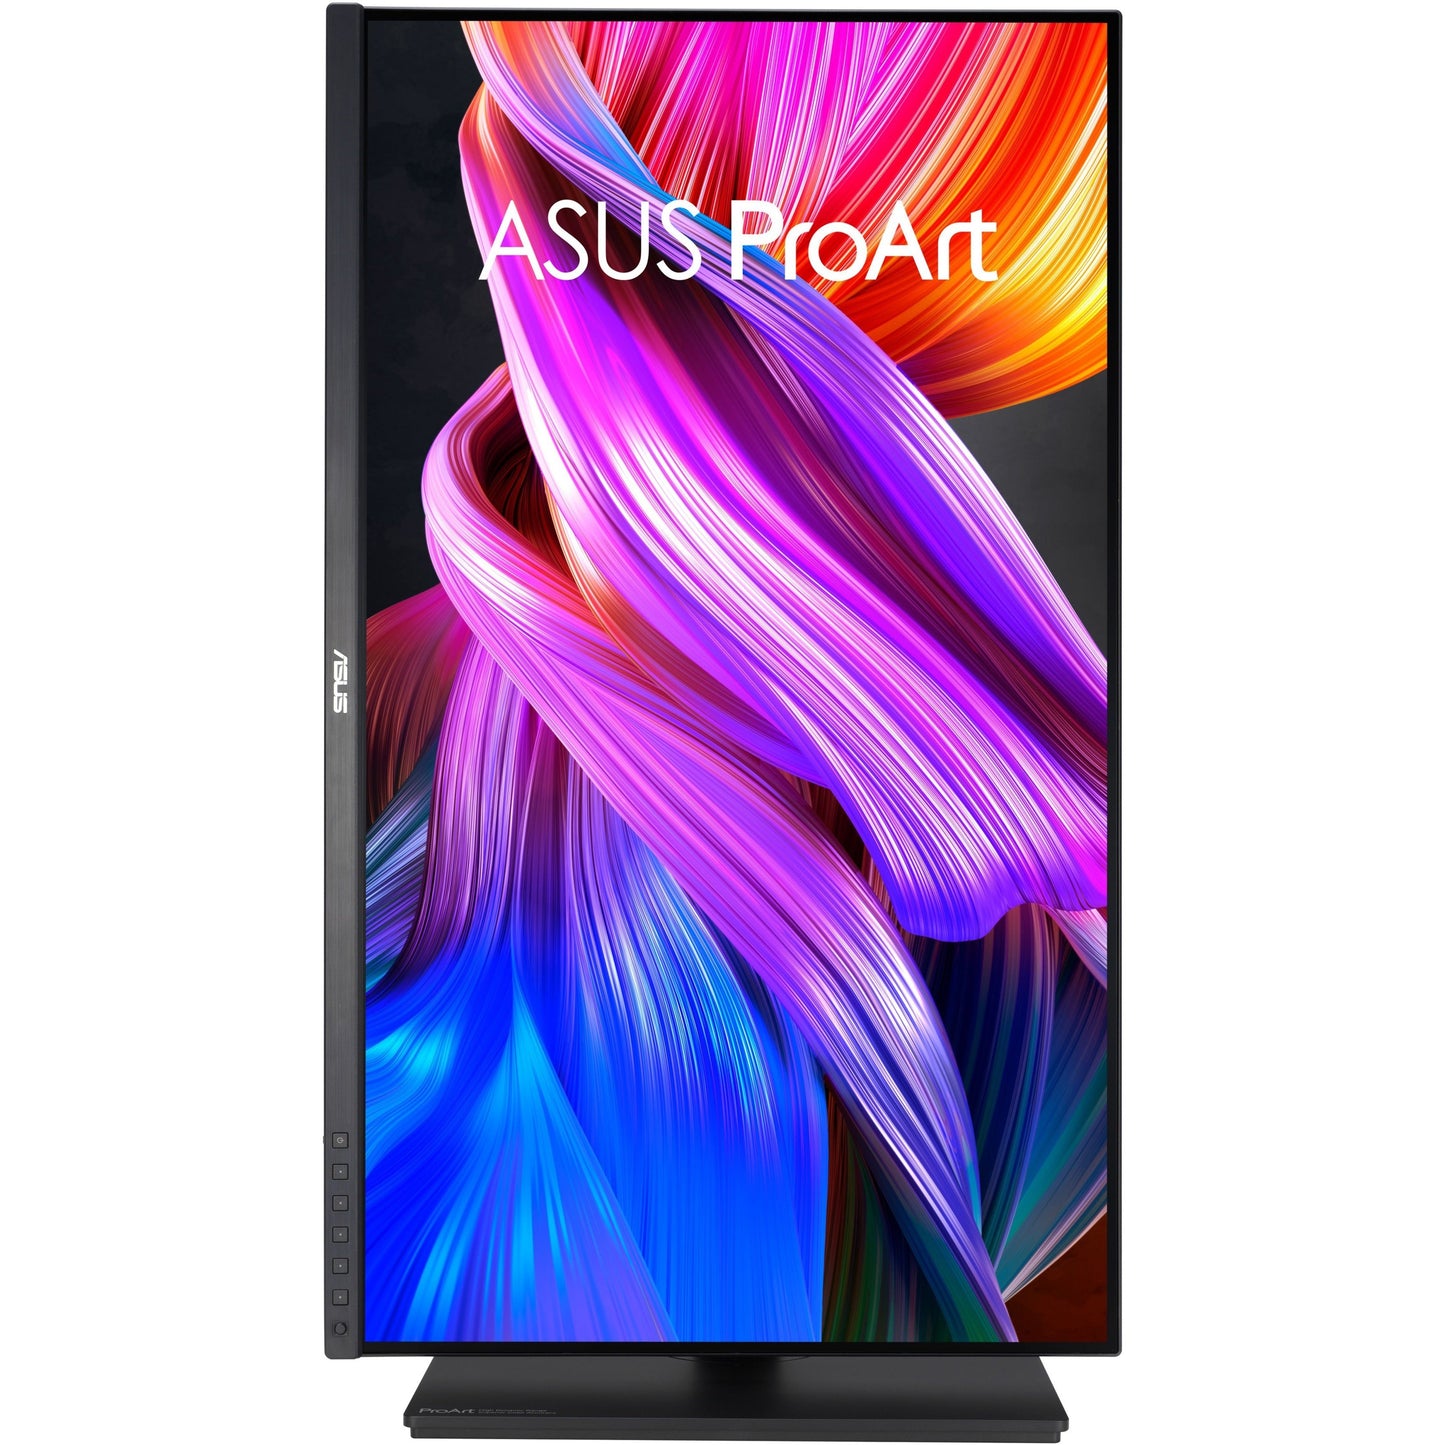 Asus ProArt PA328QV 31.5" WQHD LCD Monitor - 16:9